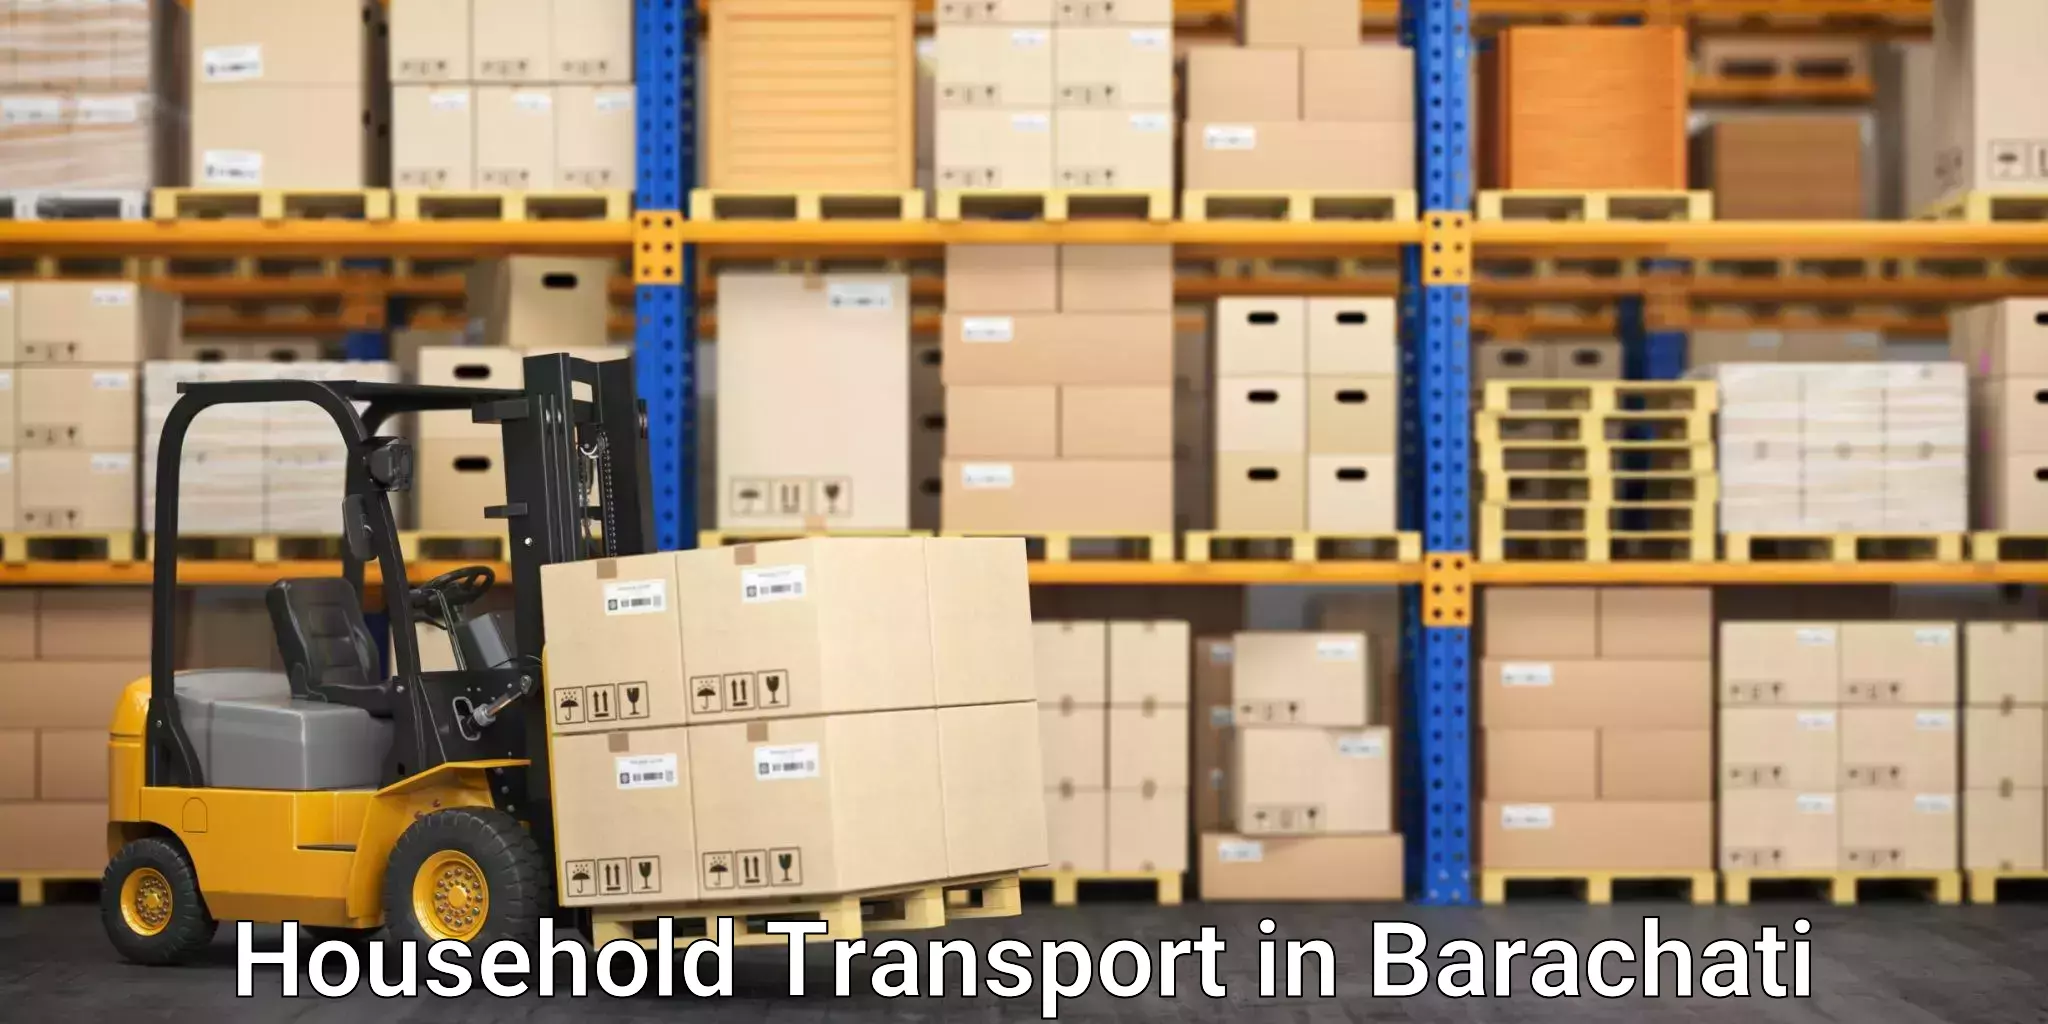 Household goods shipping in Barachati